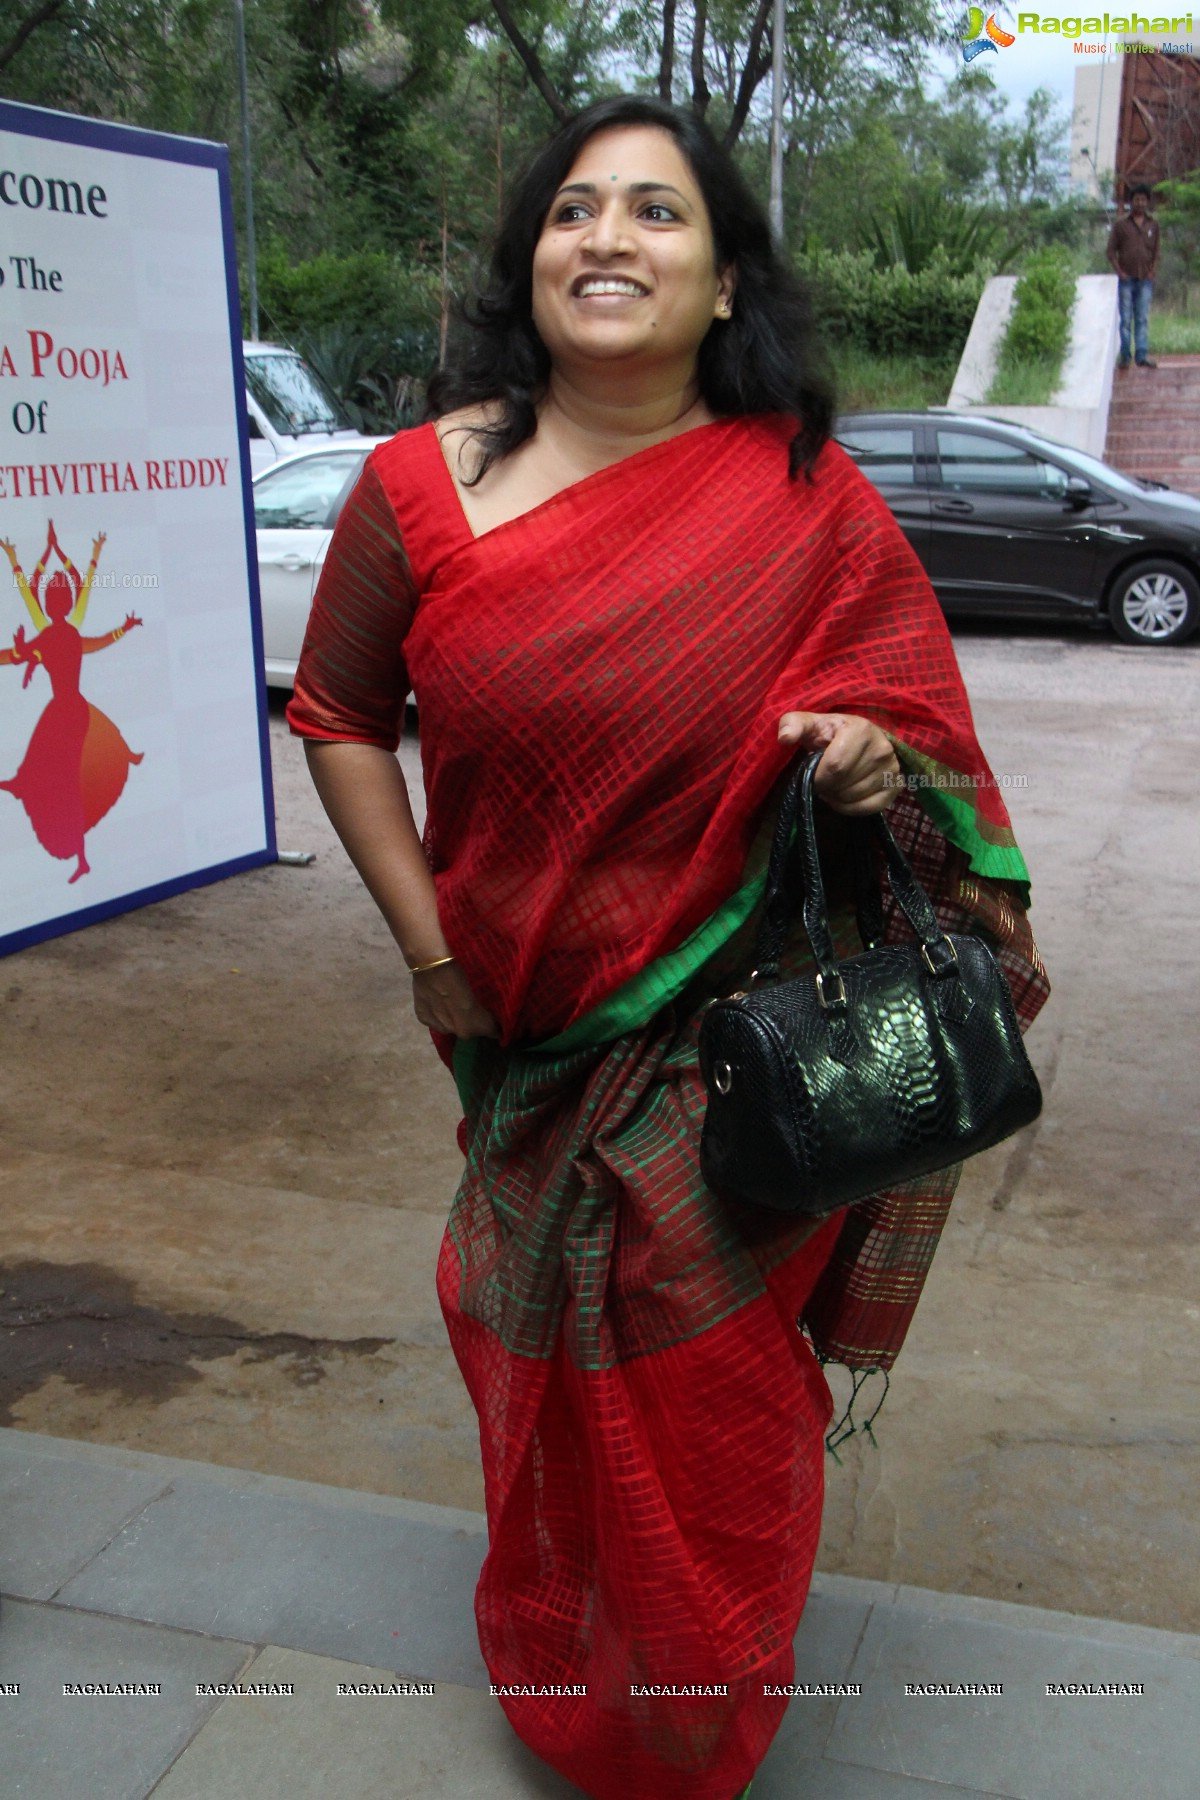 The Gajja Pooja of Nallari Hethvitha Reddy, Hyderabad